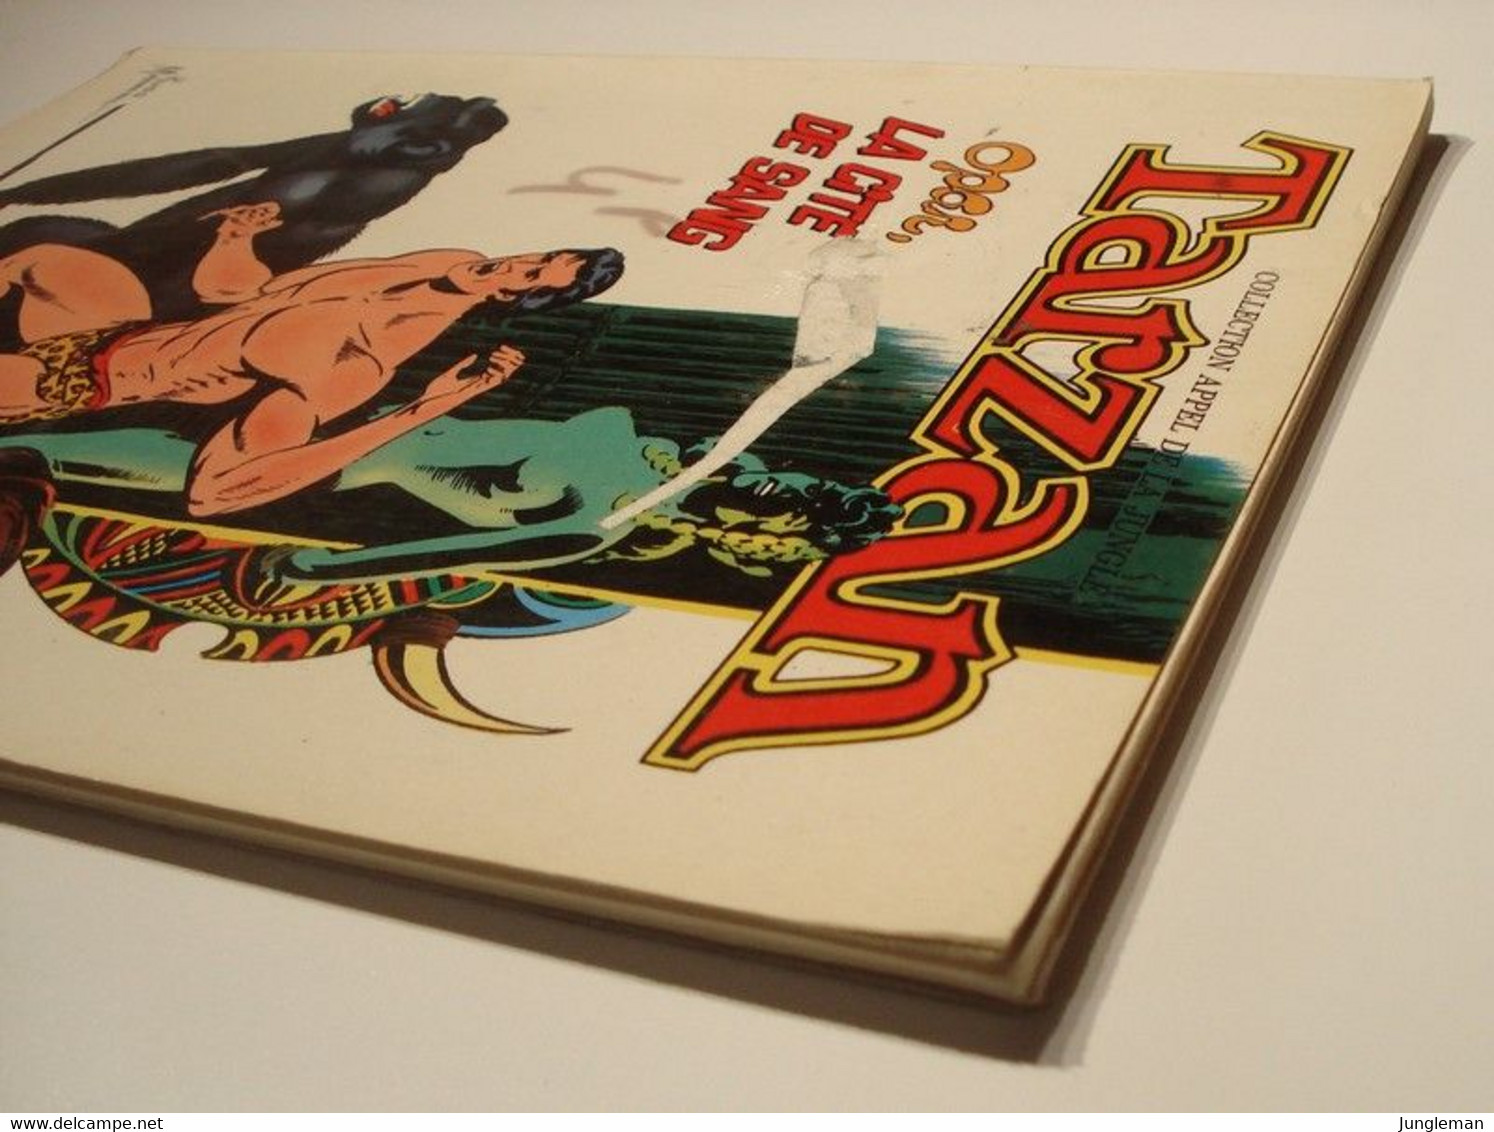 Tarzan - Opar, La Cité De Sang - Collection Appel De La Jungle - Sagédition - 1975 - Russ Manning - Tarzan